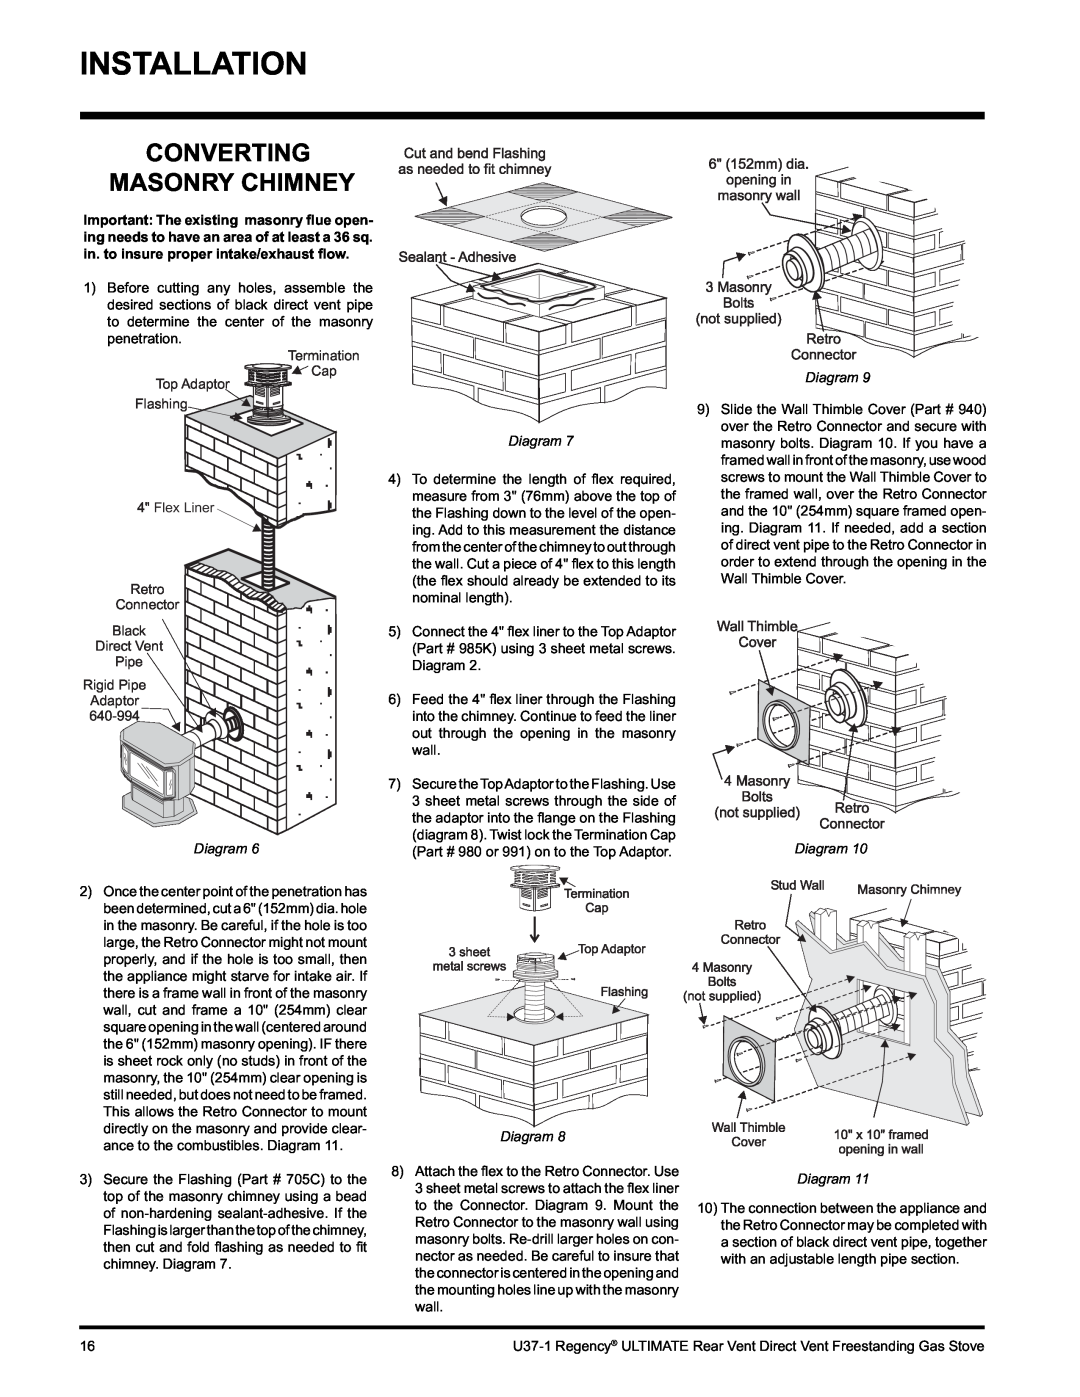 Regency U37-LP1, U37-NG1 installation manual Installation, Converting Masonry Chimney, Diagram Diagram 